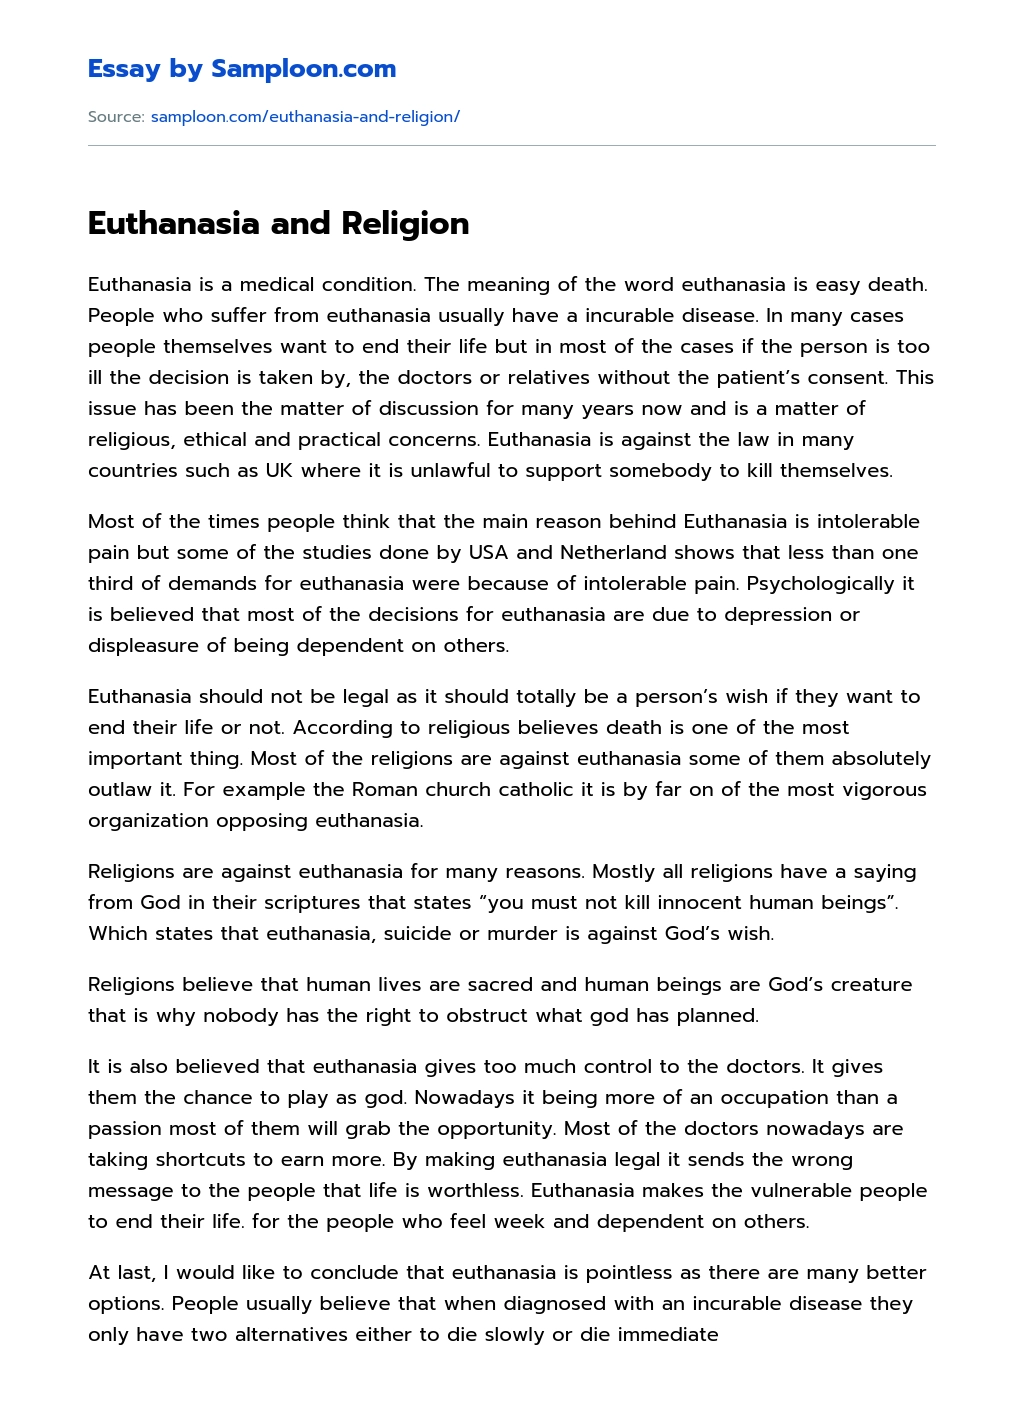 Euthanasia and Religion essay